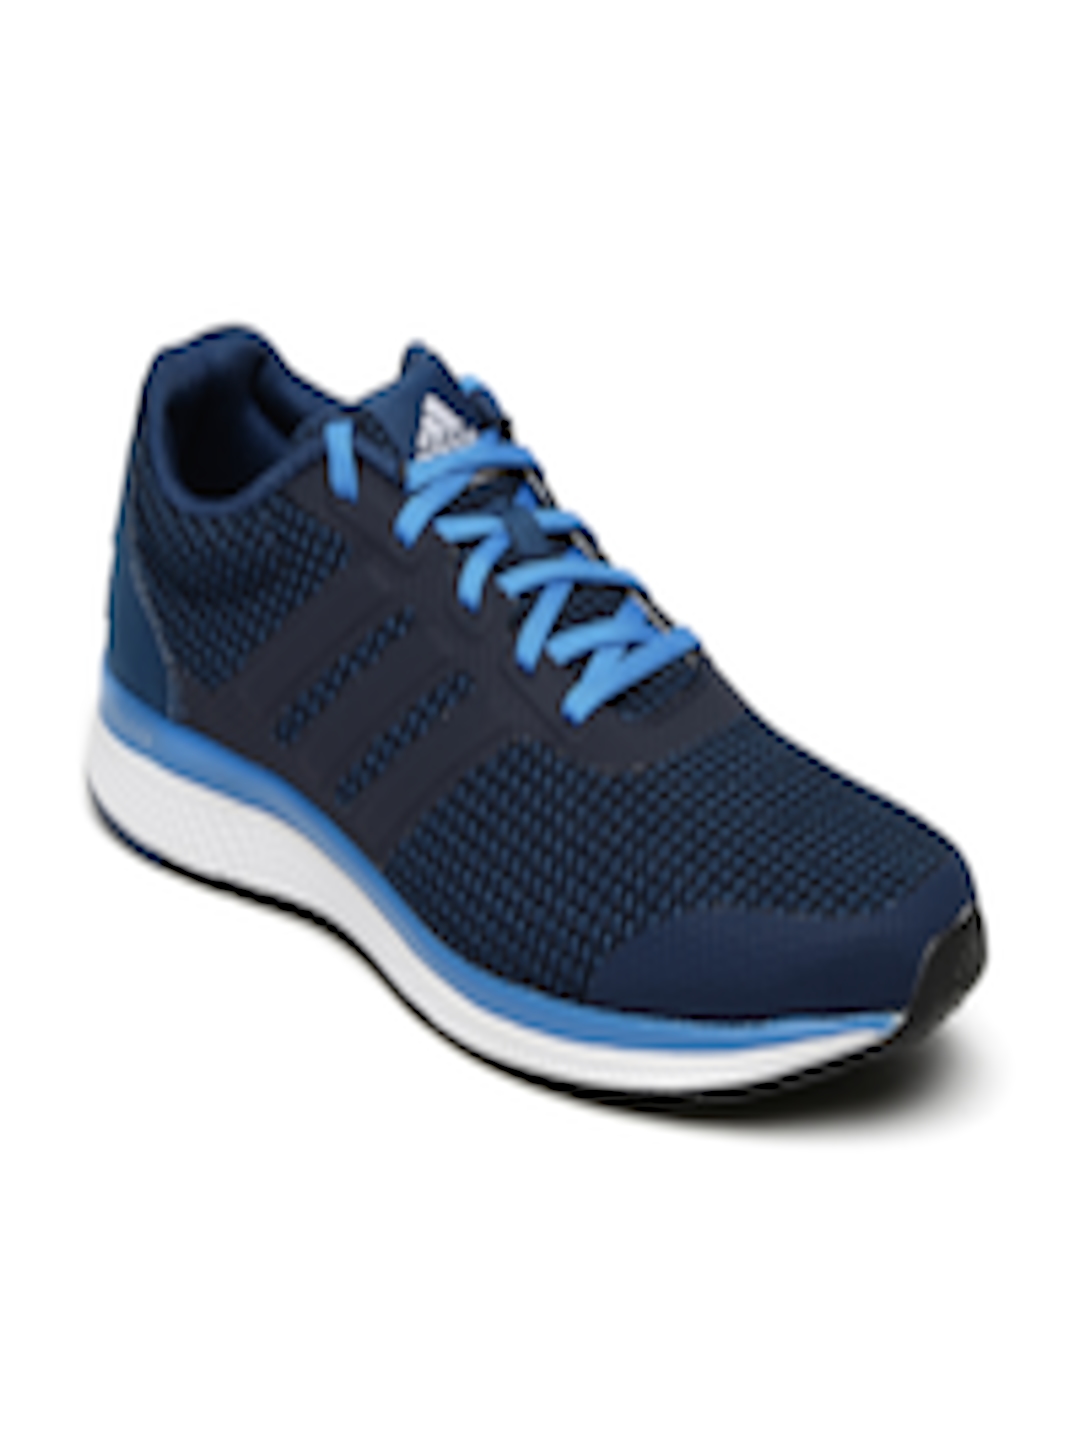 Buy ADIDAS Men Navy & Black Lightster Bounce Running Shoes - Sports ...